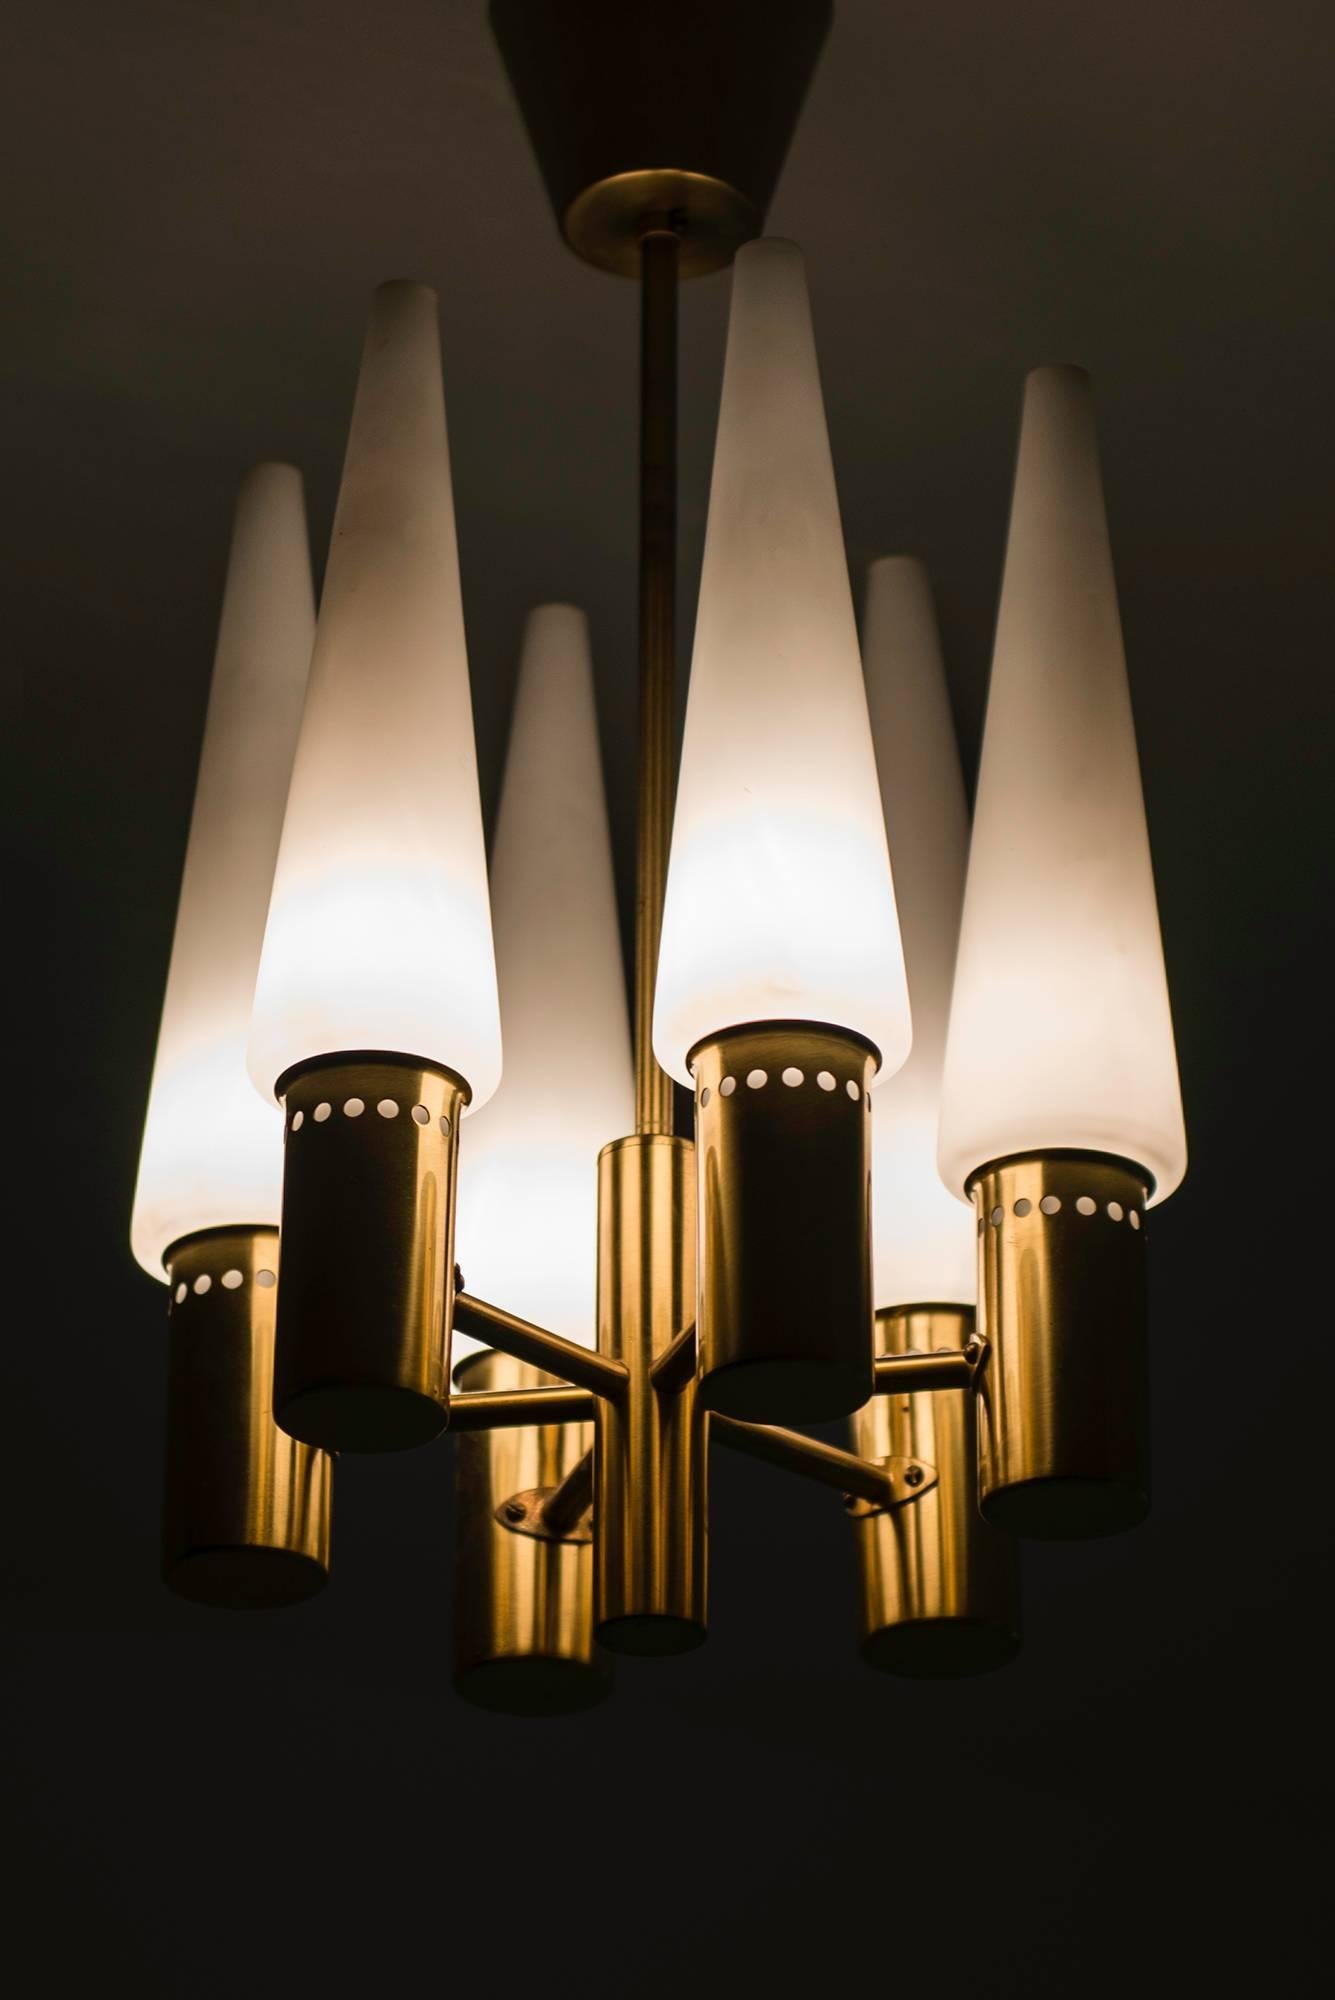 Ceiling lamp designed by Hans-Agne Jakobsson. Produced by Hans-Agne Jakobsson AB in Markaryd, Sweden.